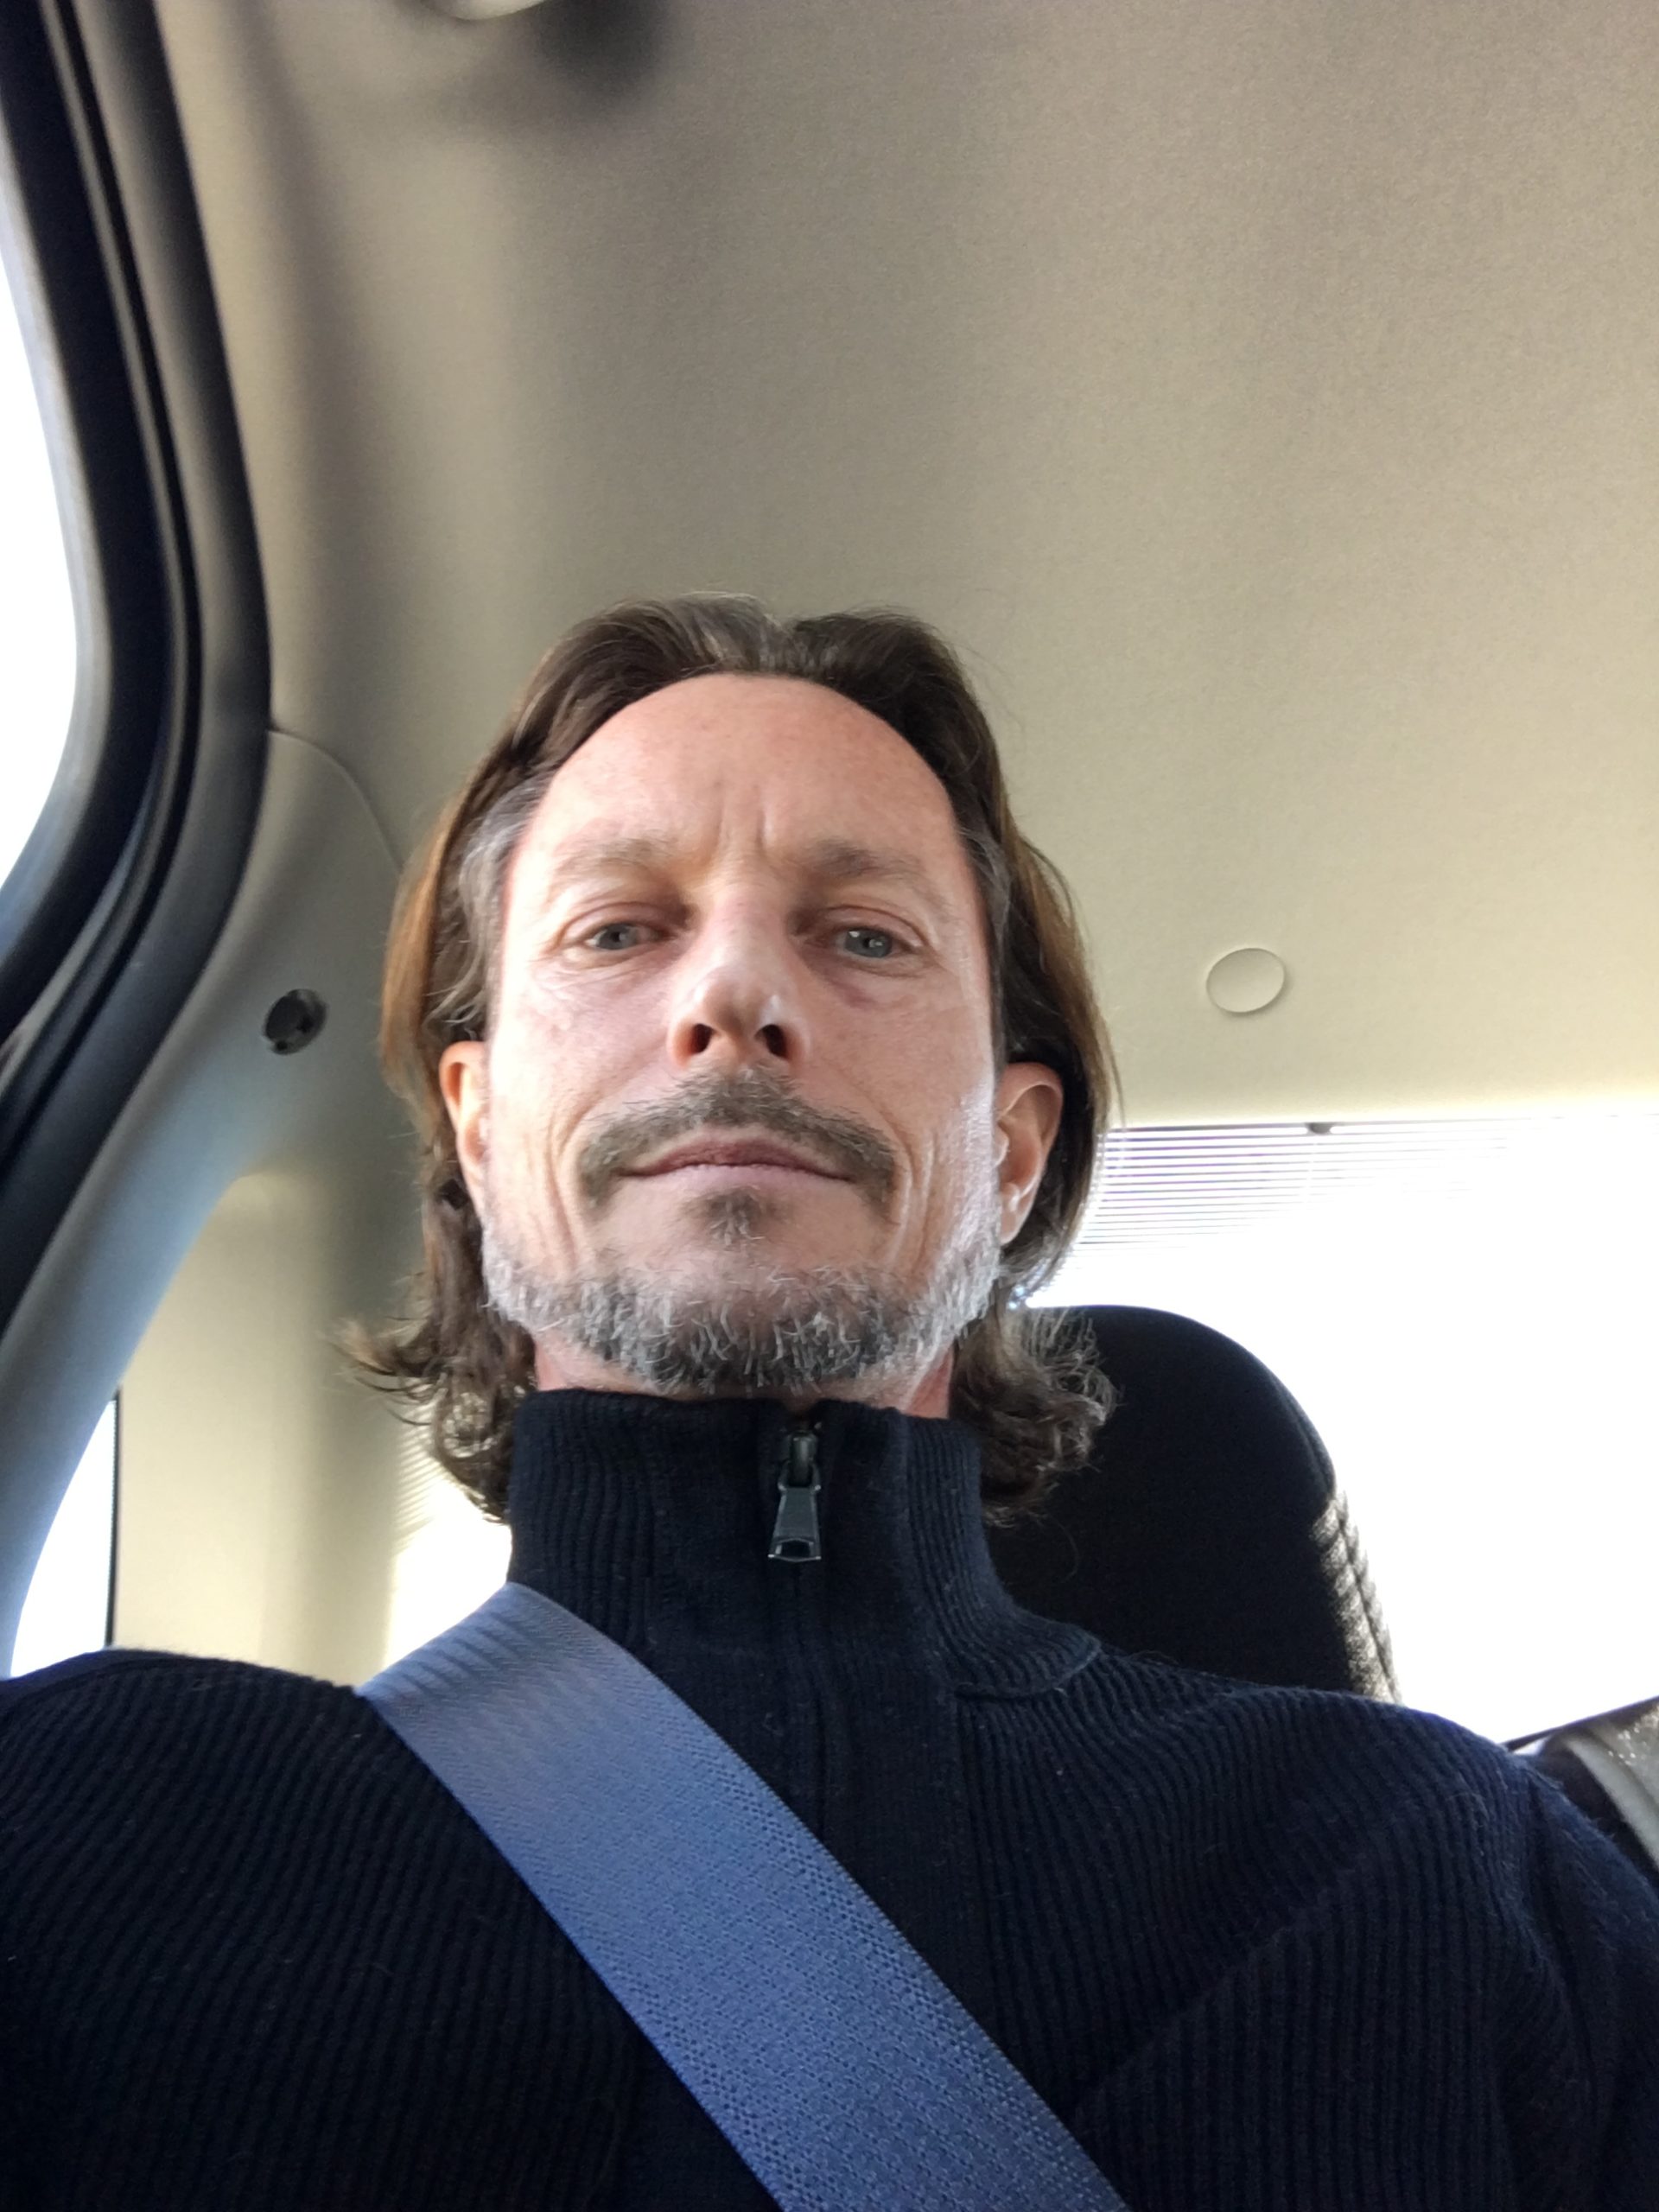 Allan Sturm Selfie In Car